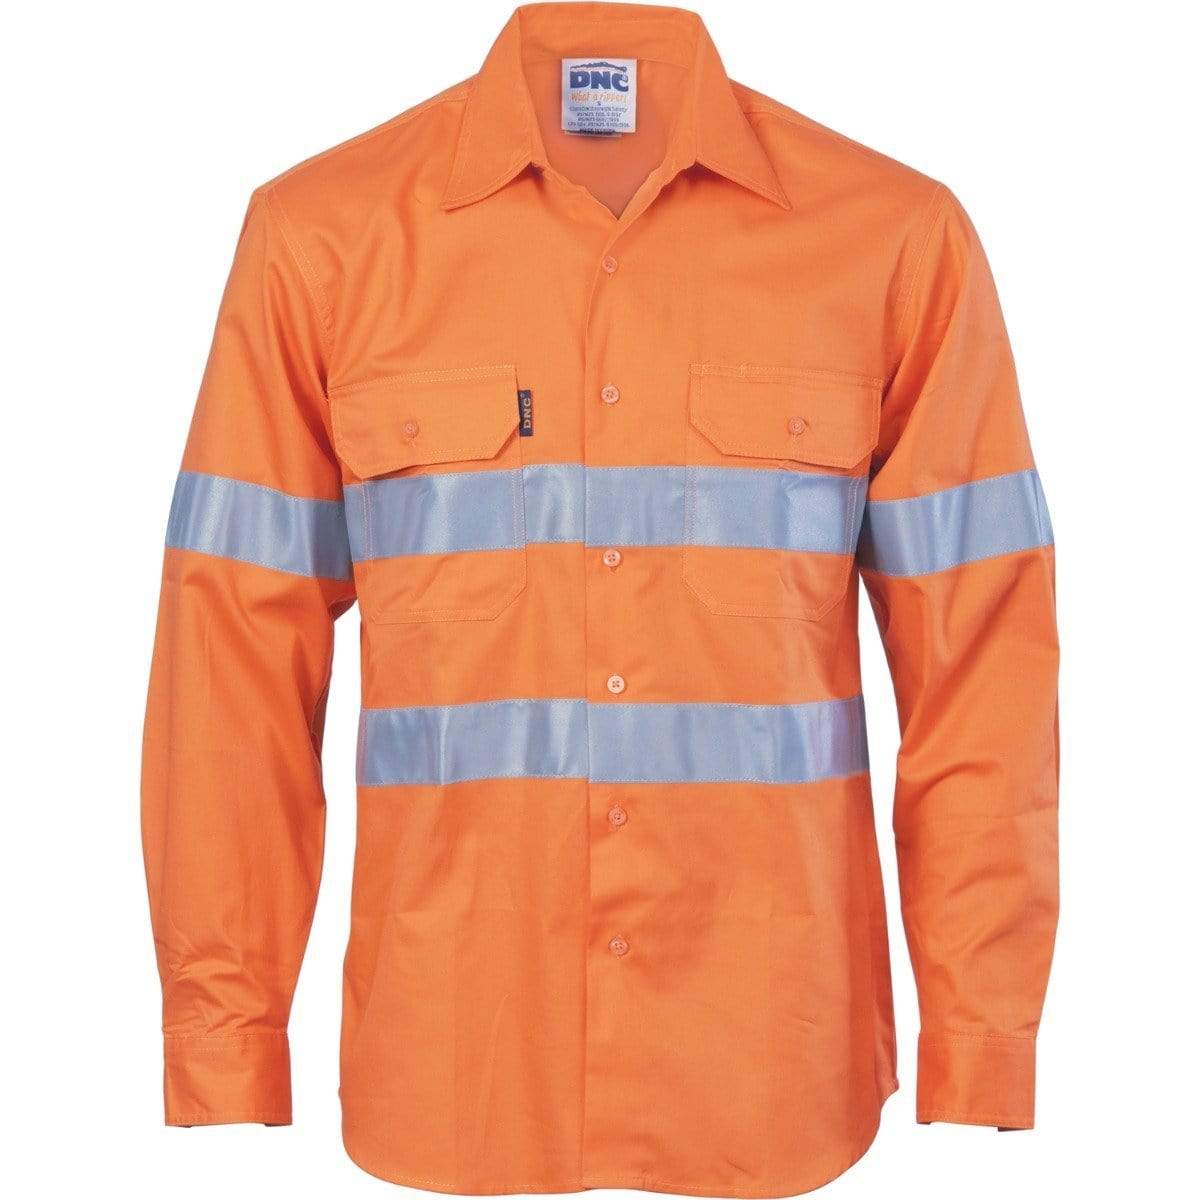 Dnc Workwear Hi-vis Cool-breeze Vertical Vented Long Sleeve Cotton Shirt With Generic Reflective Tape - 3985 Work Wear DNC Workwear Orange XS 